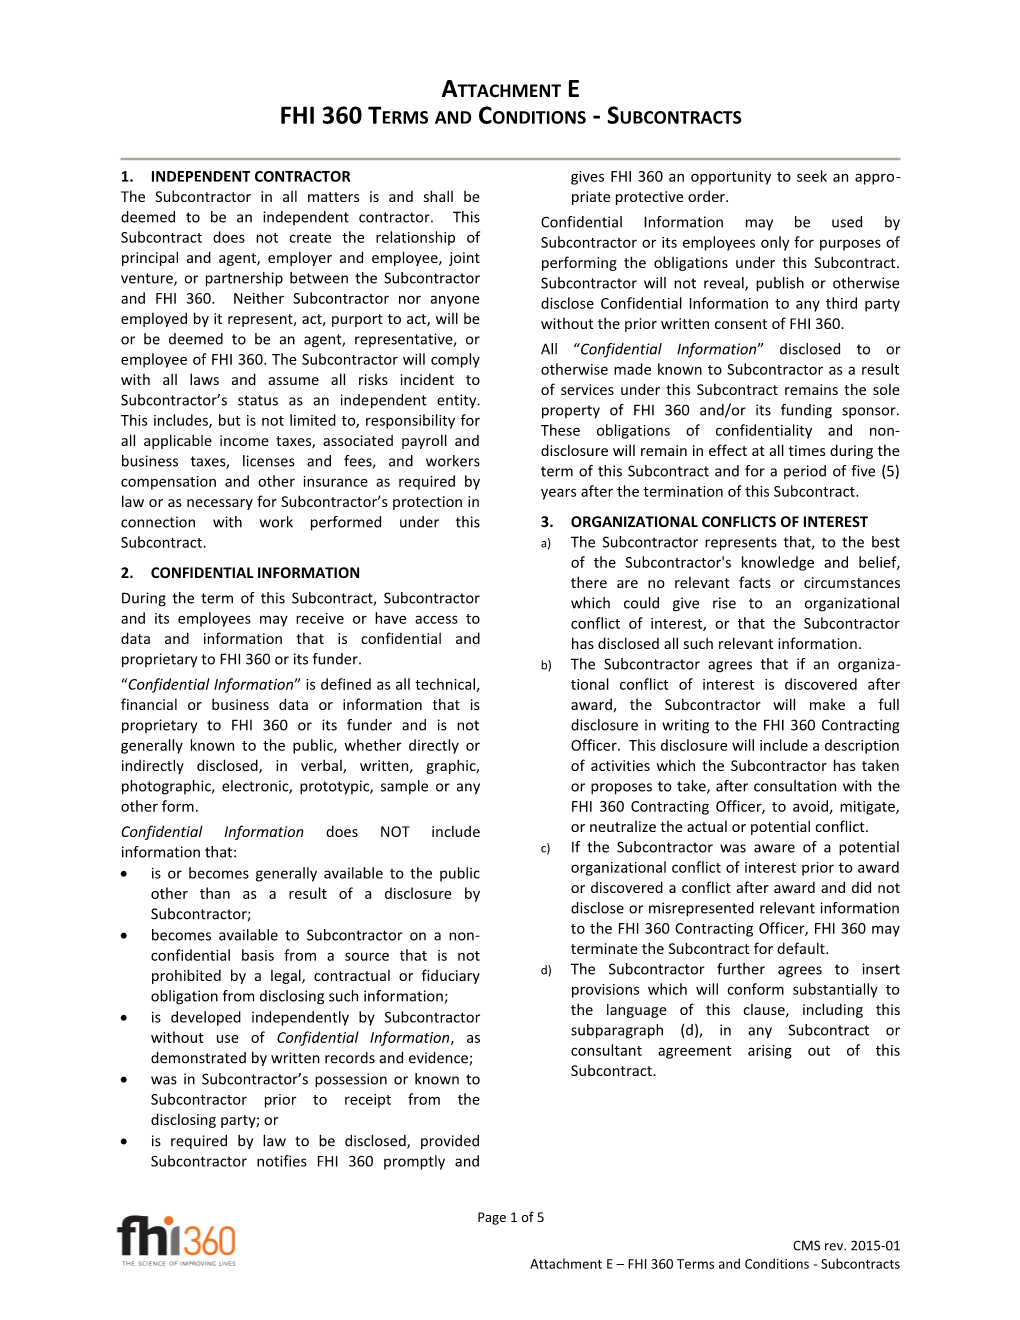 Attachment E FHI 360 Terms and Conditions - Subcontracts